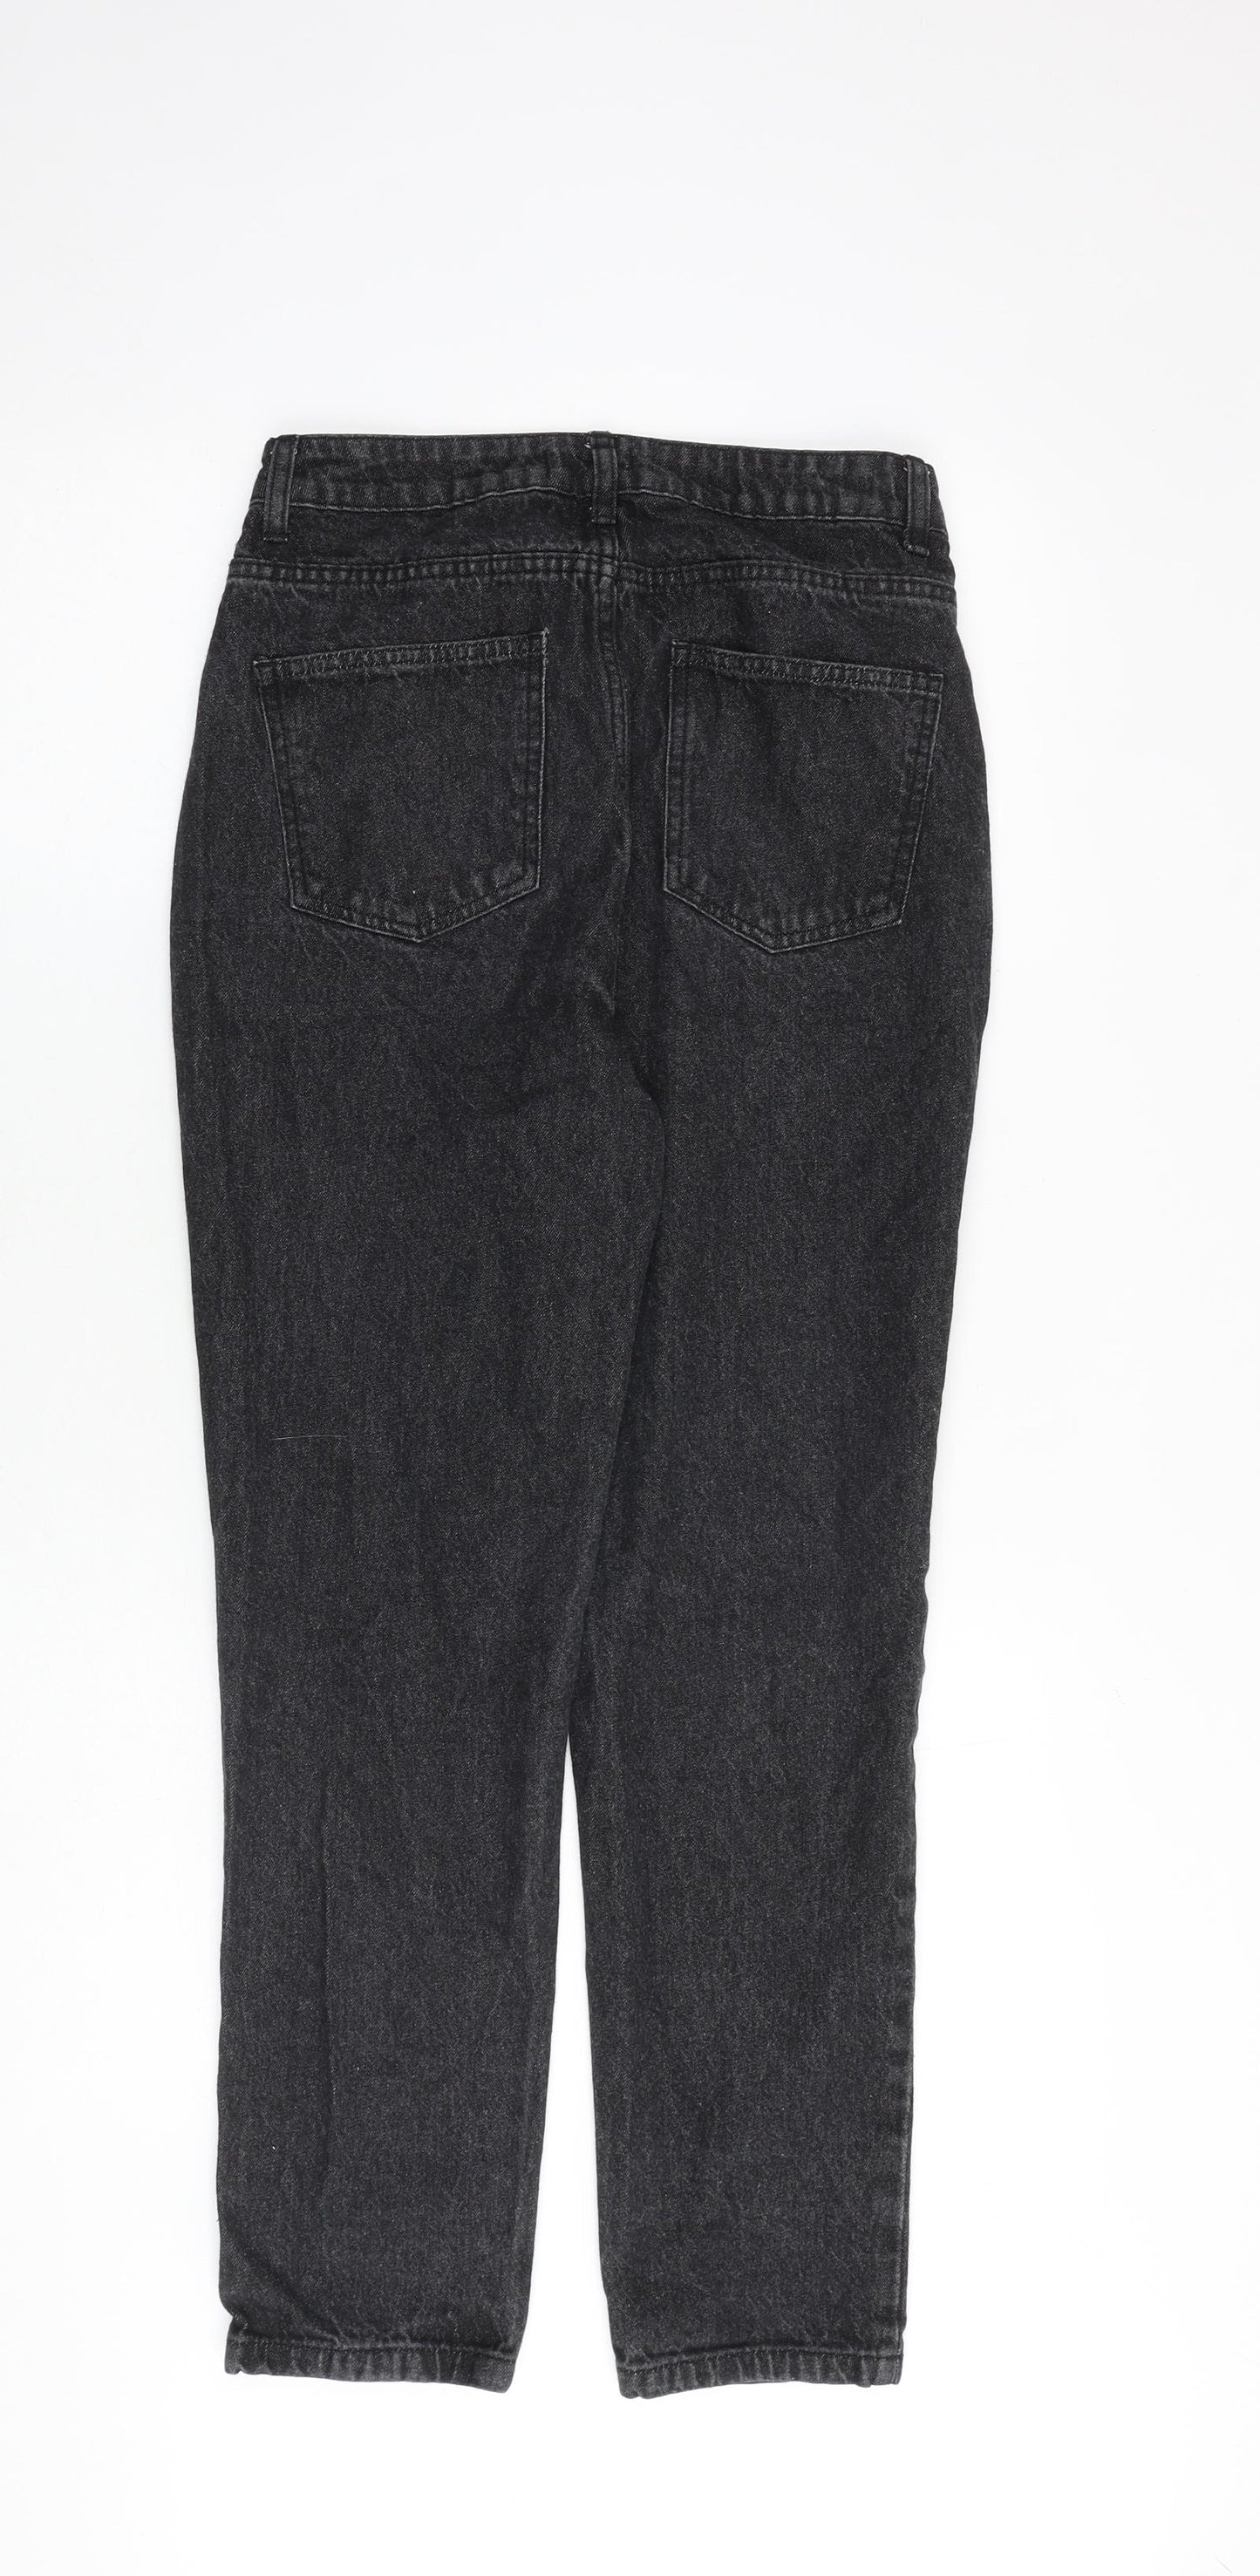 Boohoo Womens Black Cotton Mom Jeans Size 8 L28 in Regular Zip